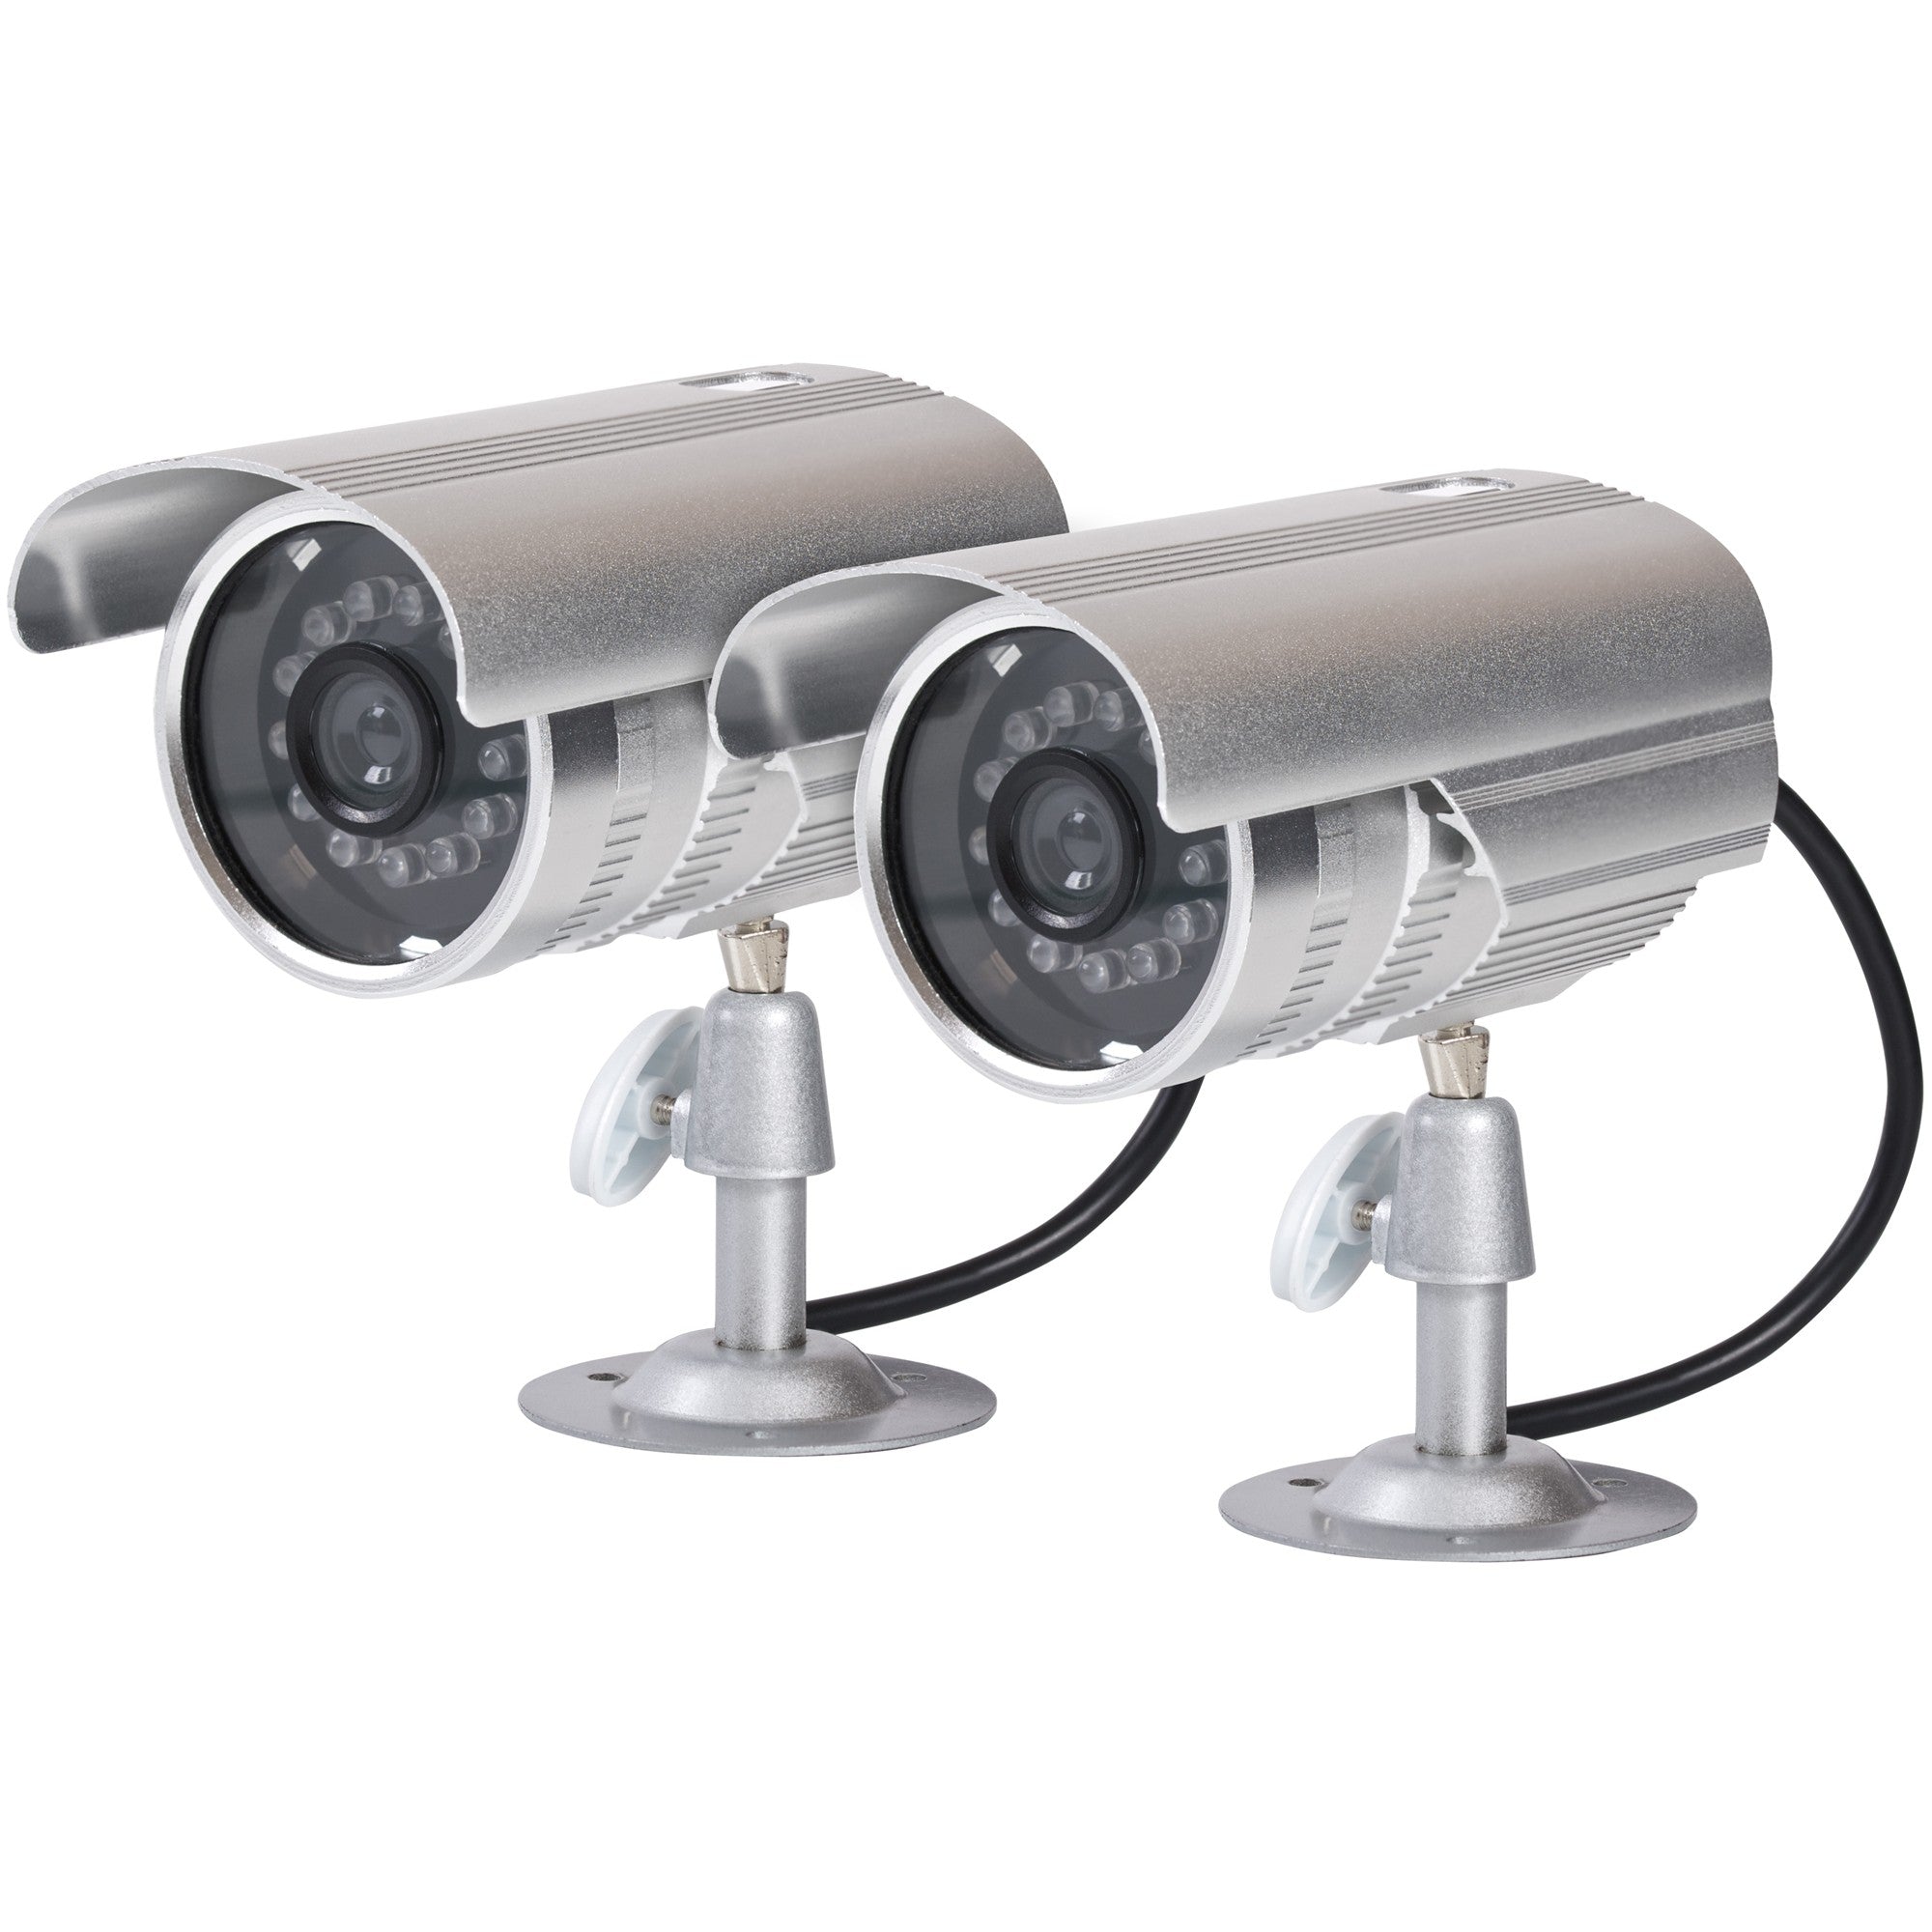 ProperAV Imitation Dummy Security Camera Kit includes 2 Aluminium Cameras